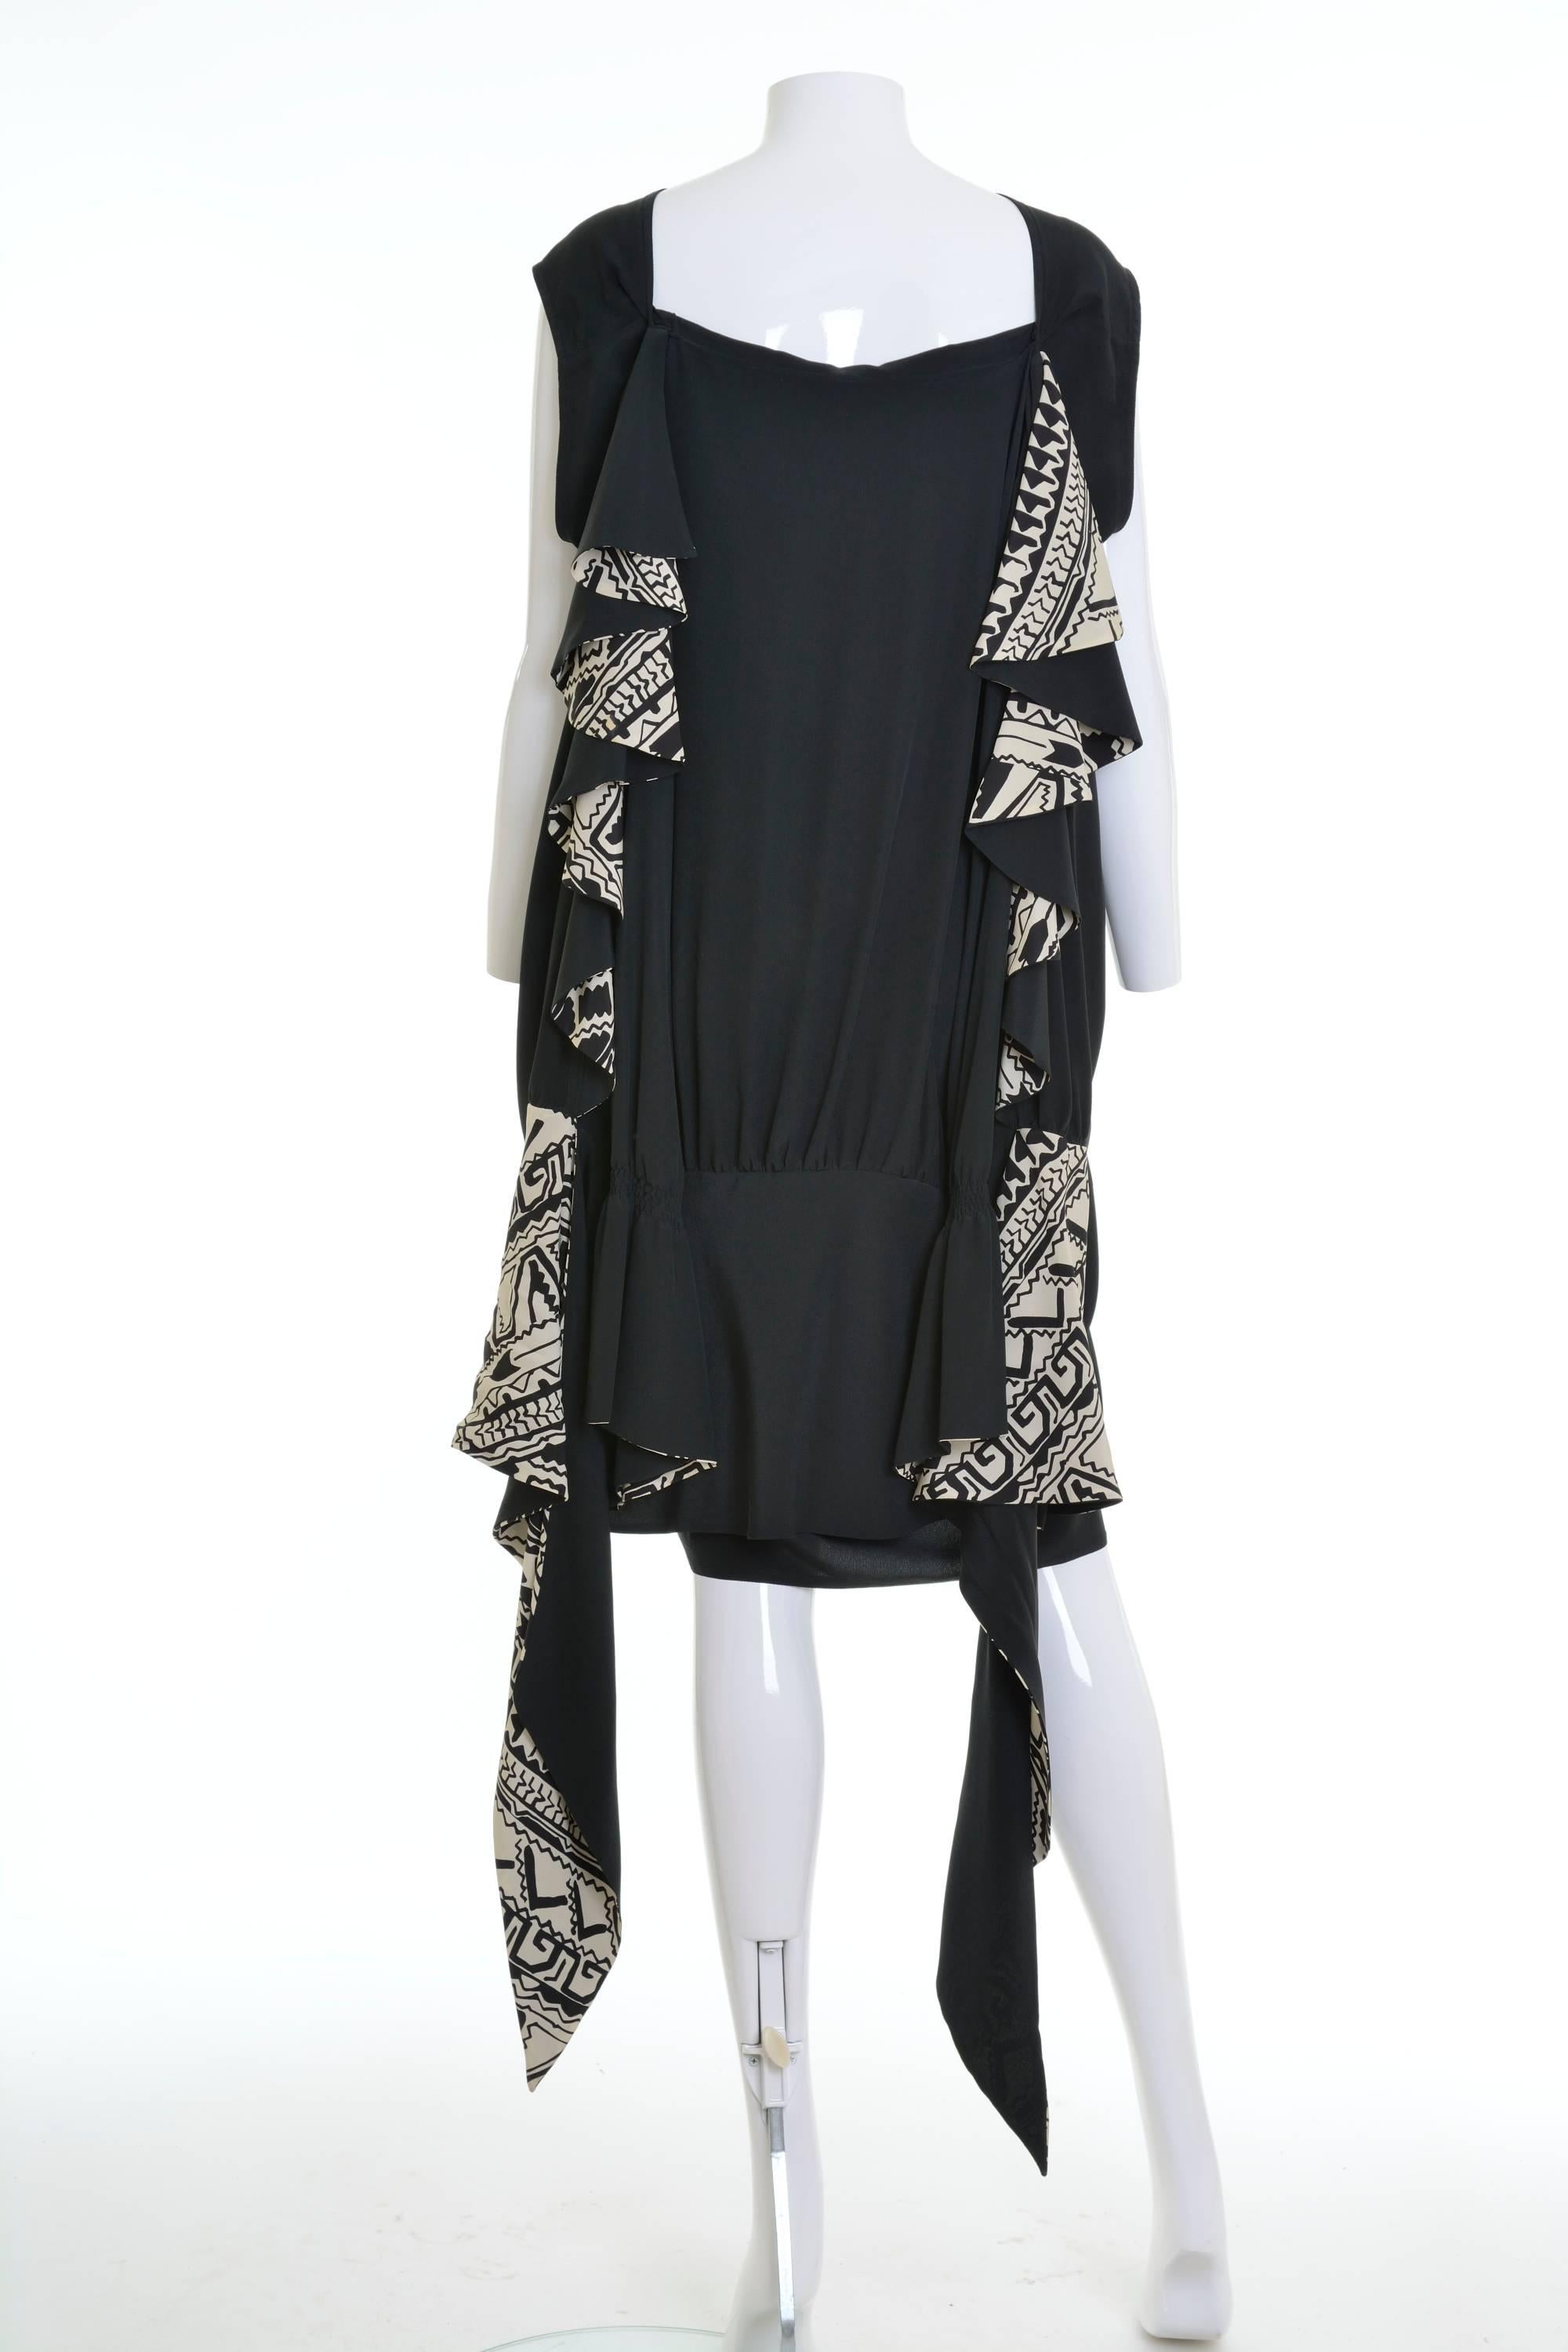 Women's 1980s CADETTE Black Silk Cocktail Dress For Sale